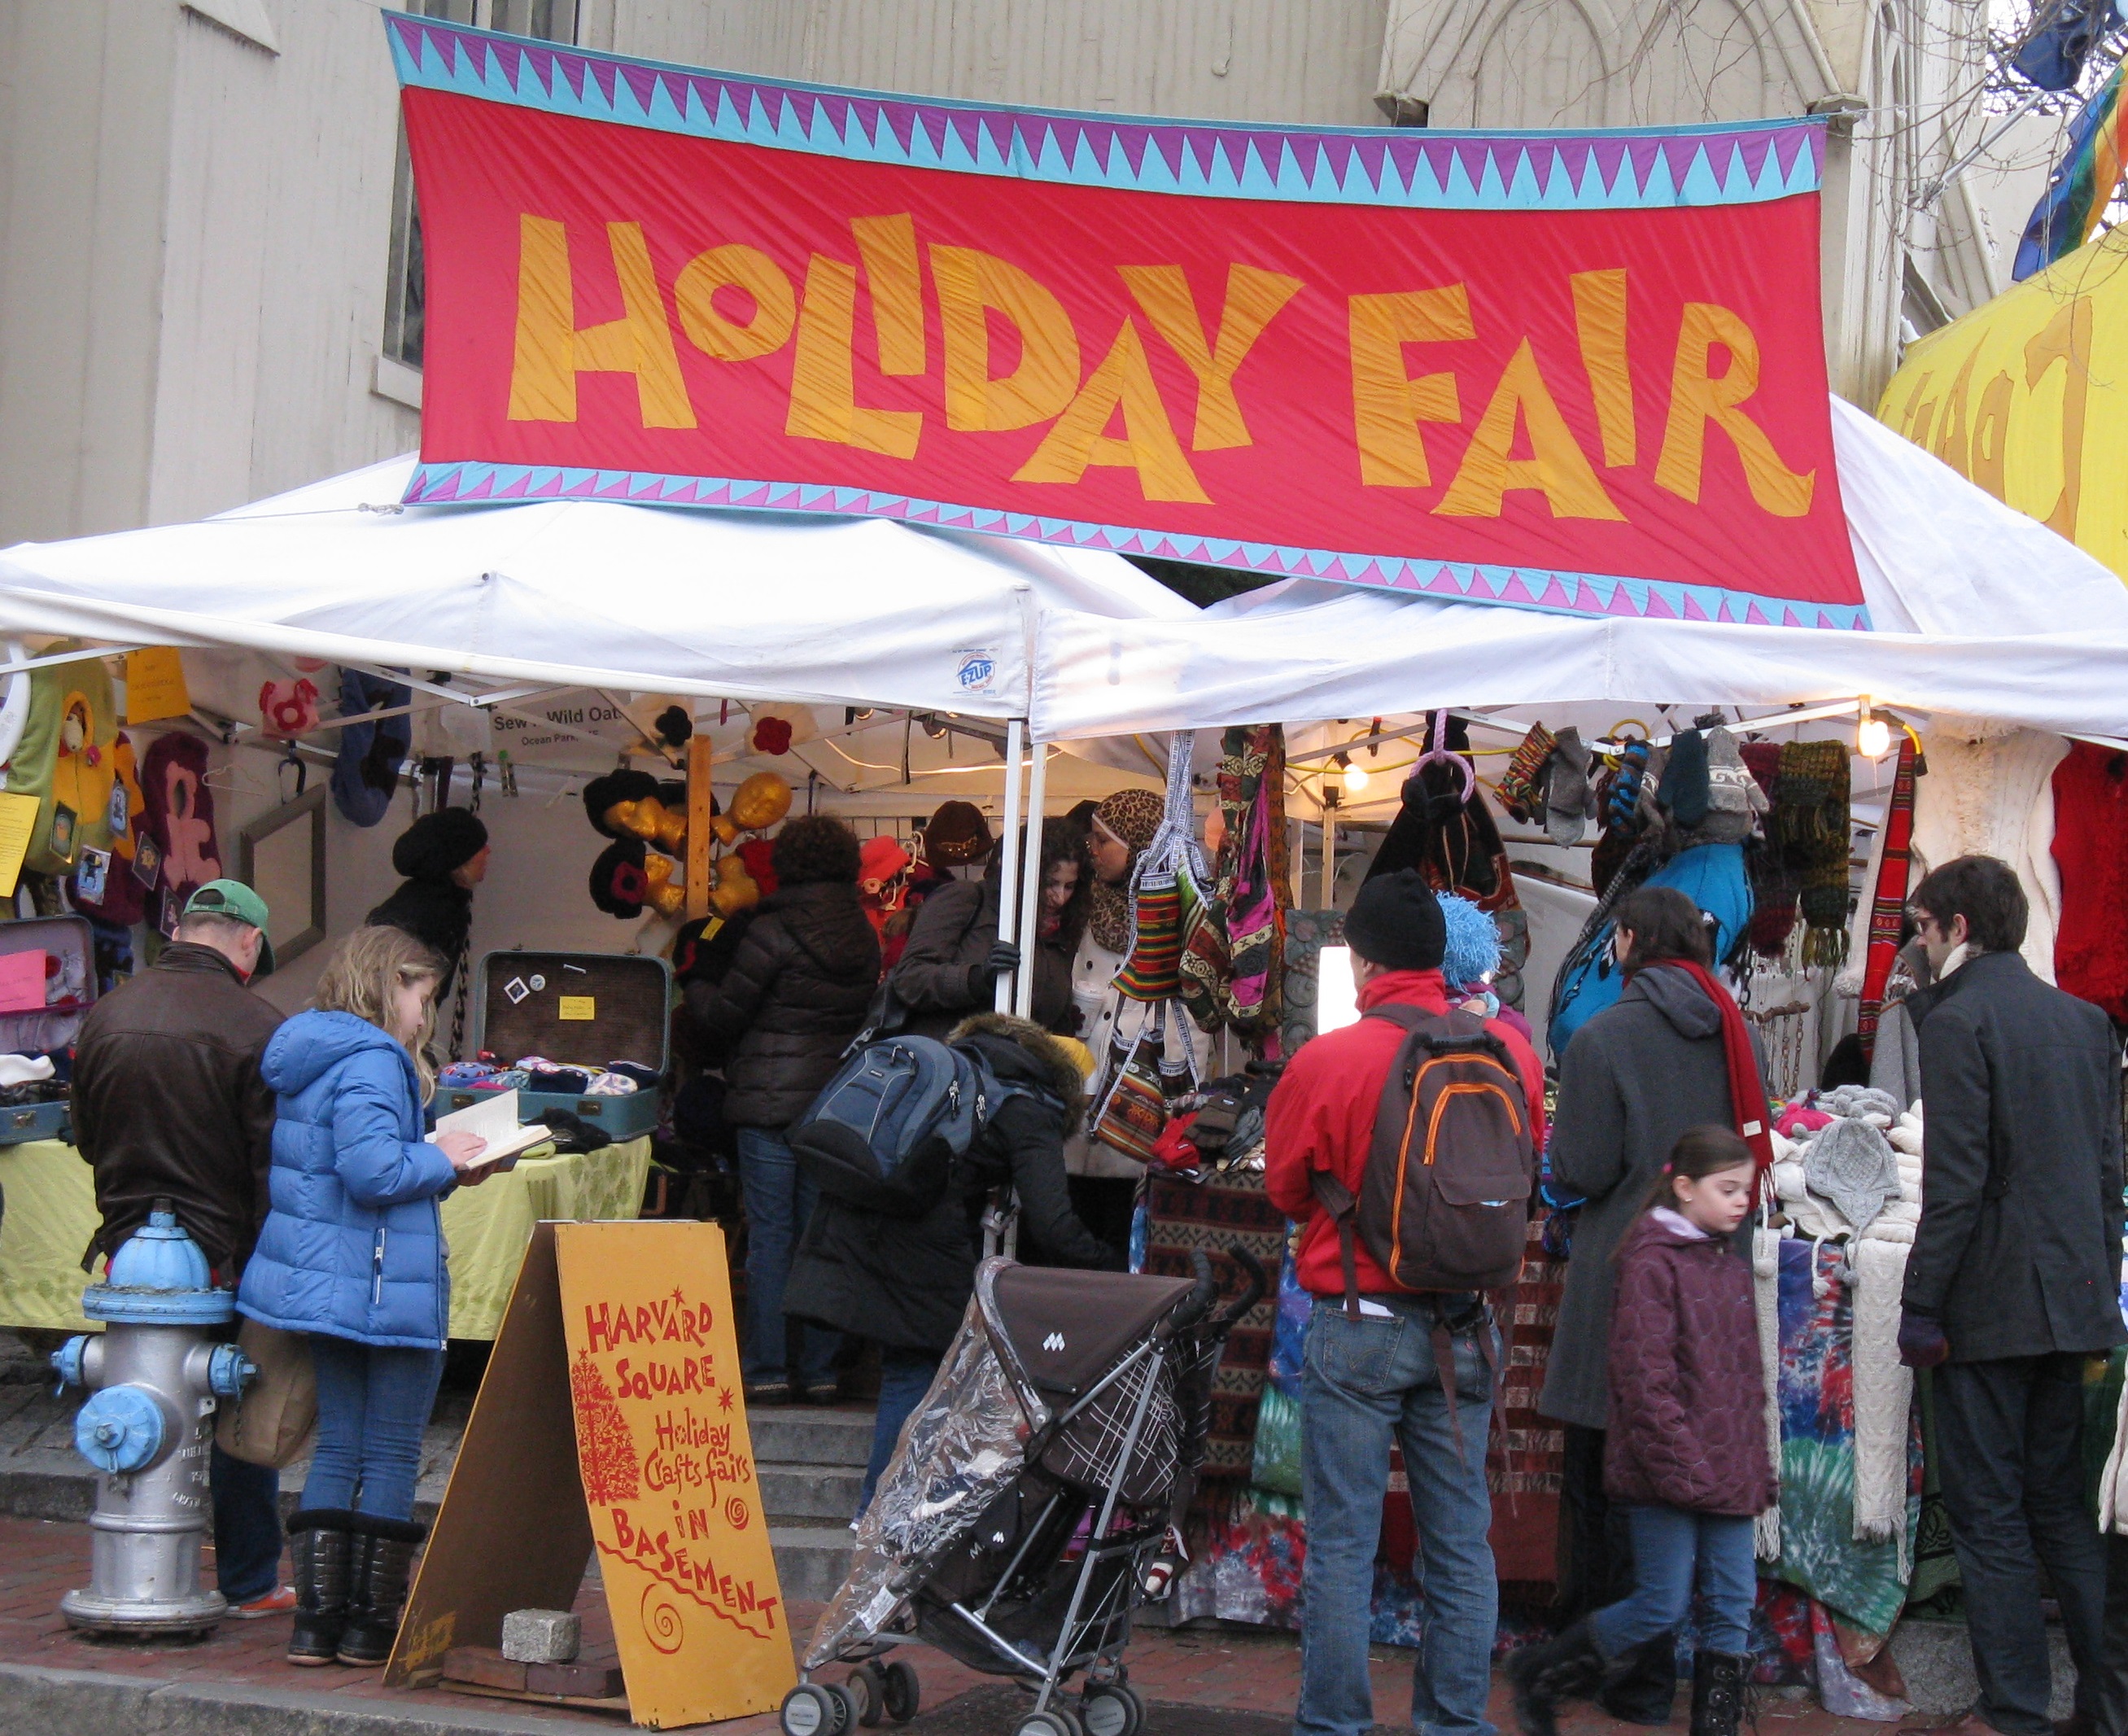 Harvard Sq Holiday Crafts Fair